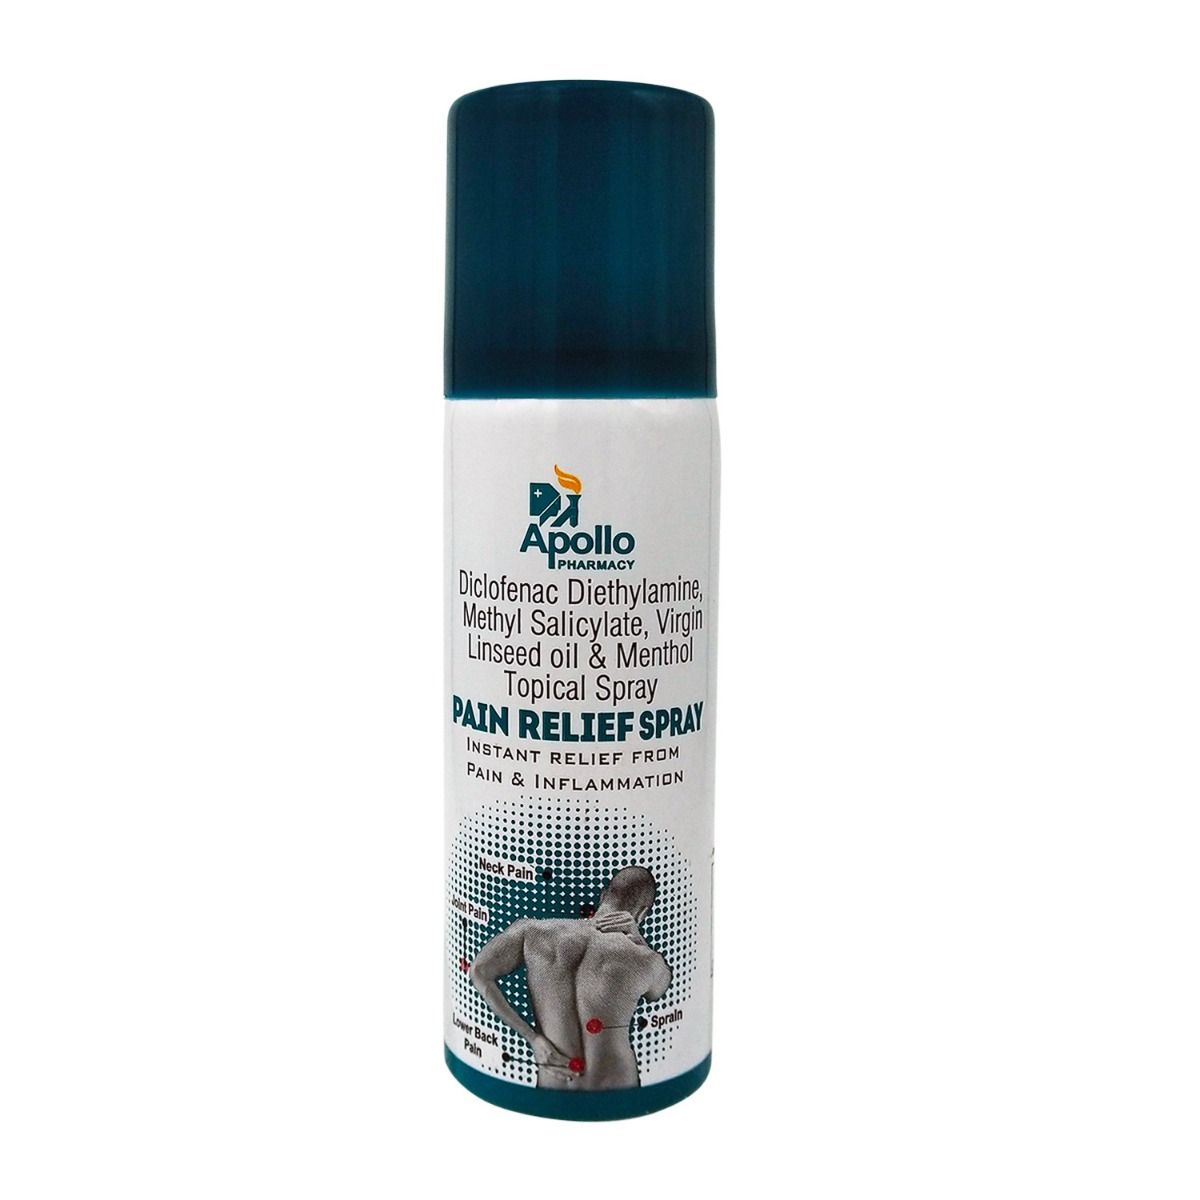 Apollo Pharmacy Pain Relief Spray, 50 ml, Pack of 1 